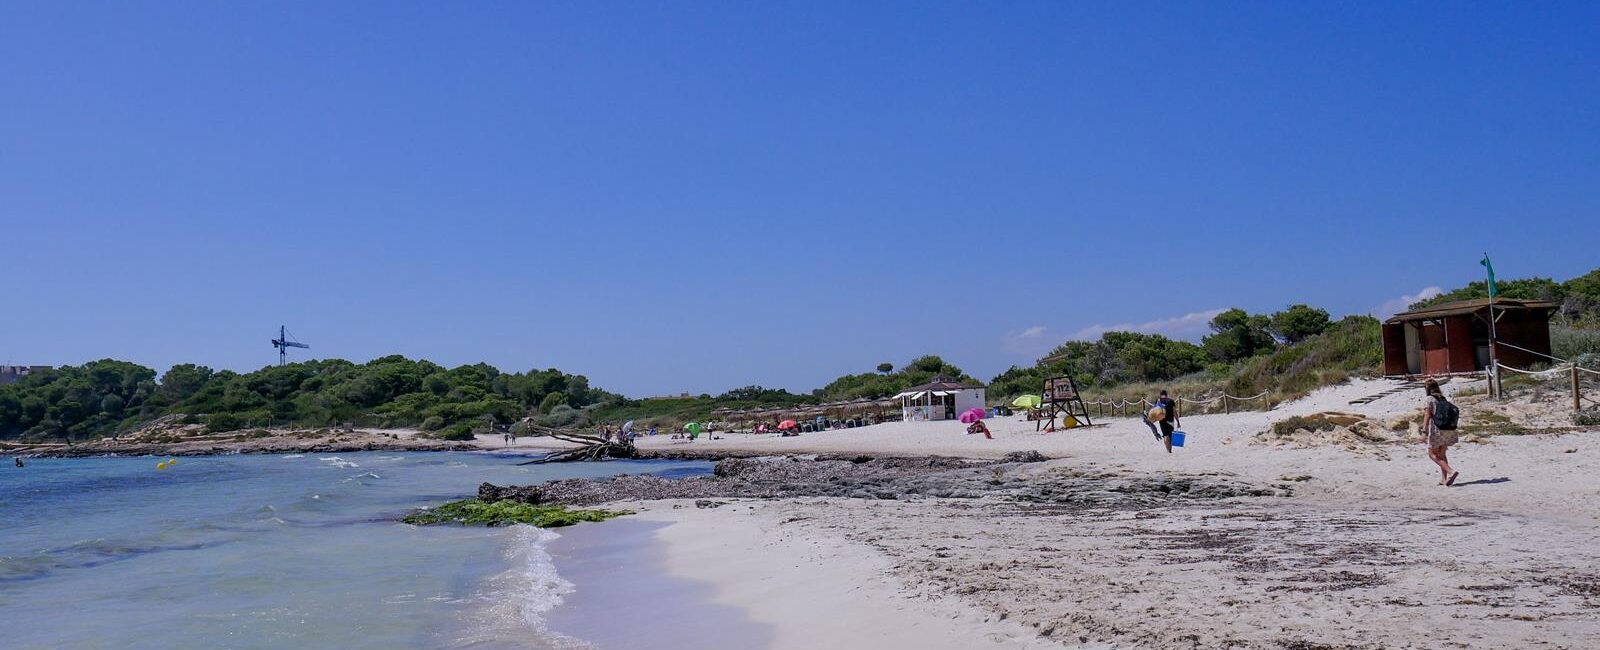 Platja Estanys na Majorce – rajskie plaże na południu Majorki